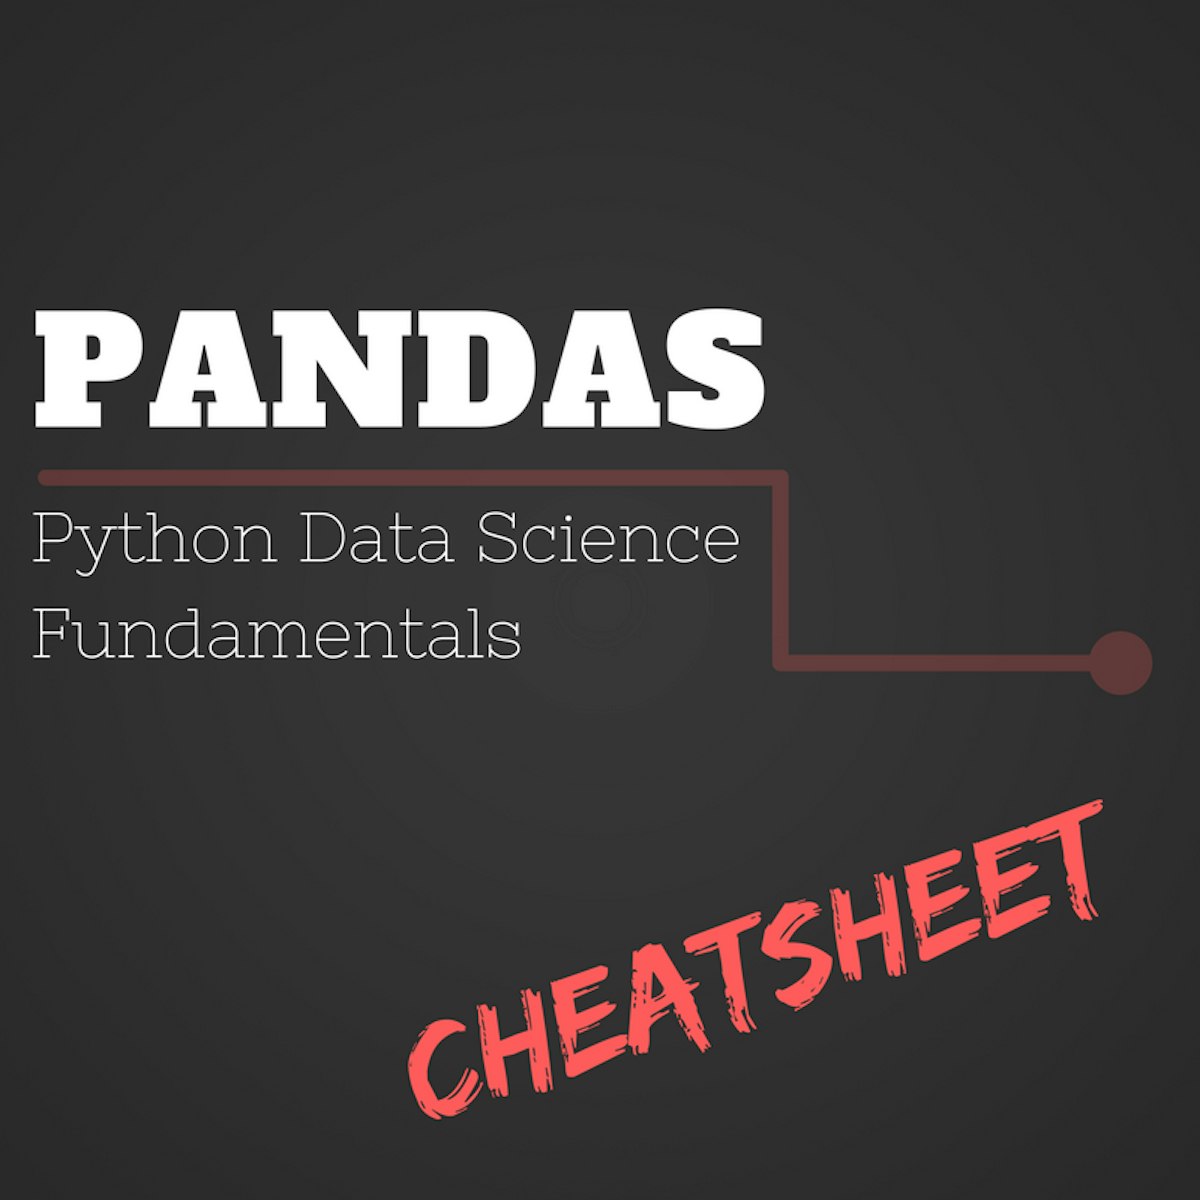 featured image - Fundamental Python Data Science Libraries: A Cheatsheet (Part 2/4)